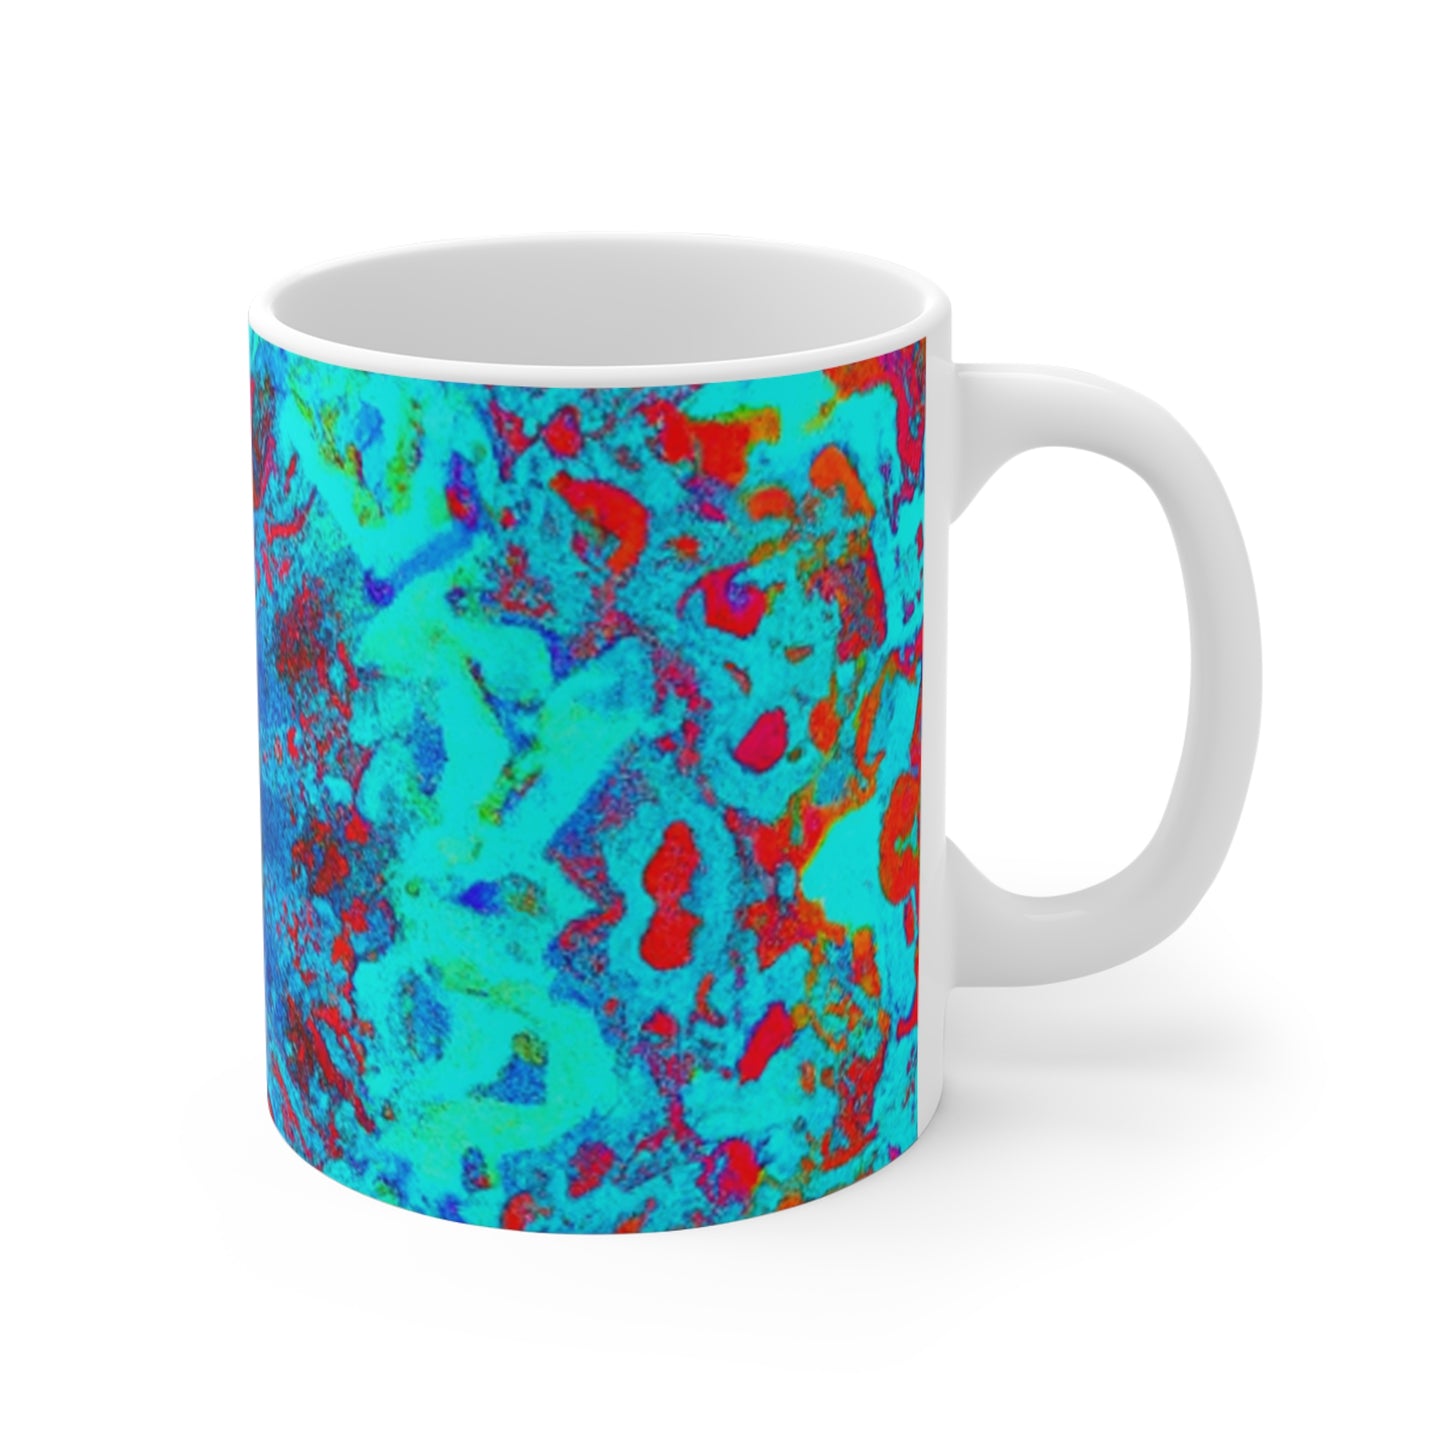 Rosalee's Roastings - Psychedelic Coffee Cup Mug 11 Ounce